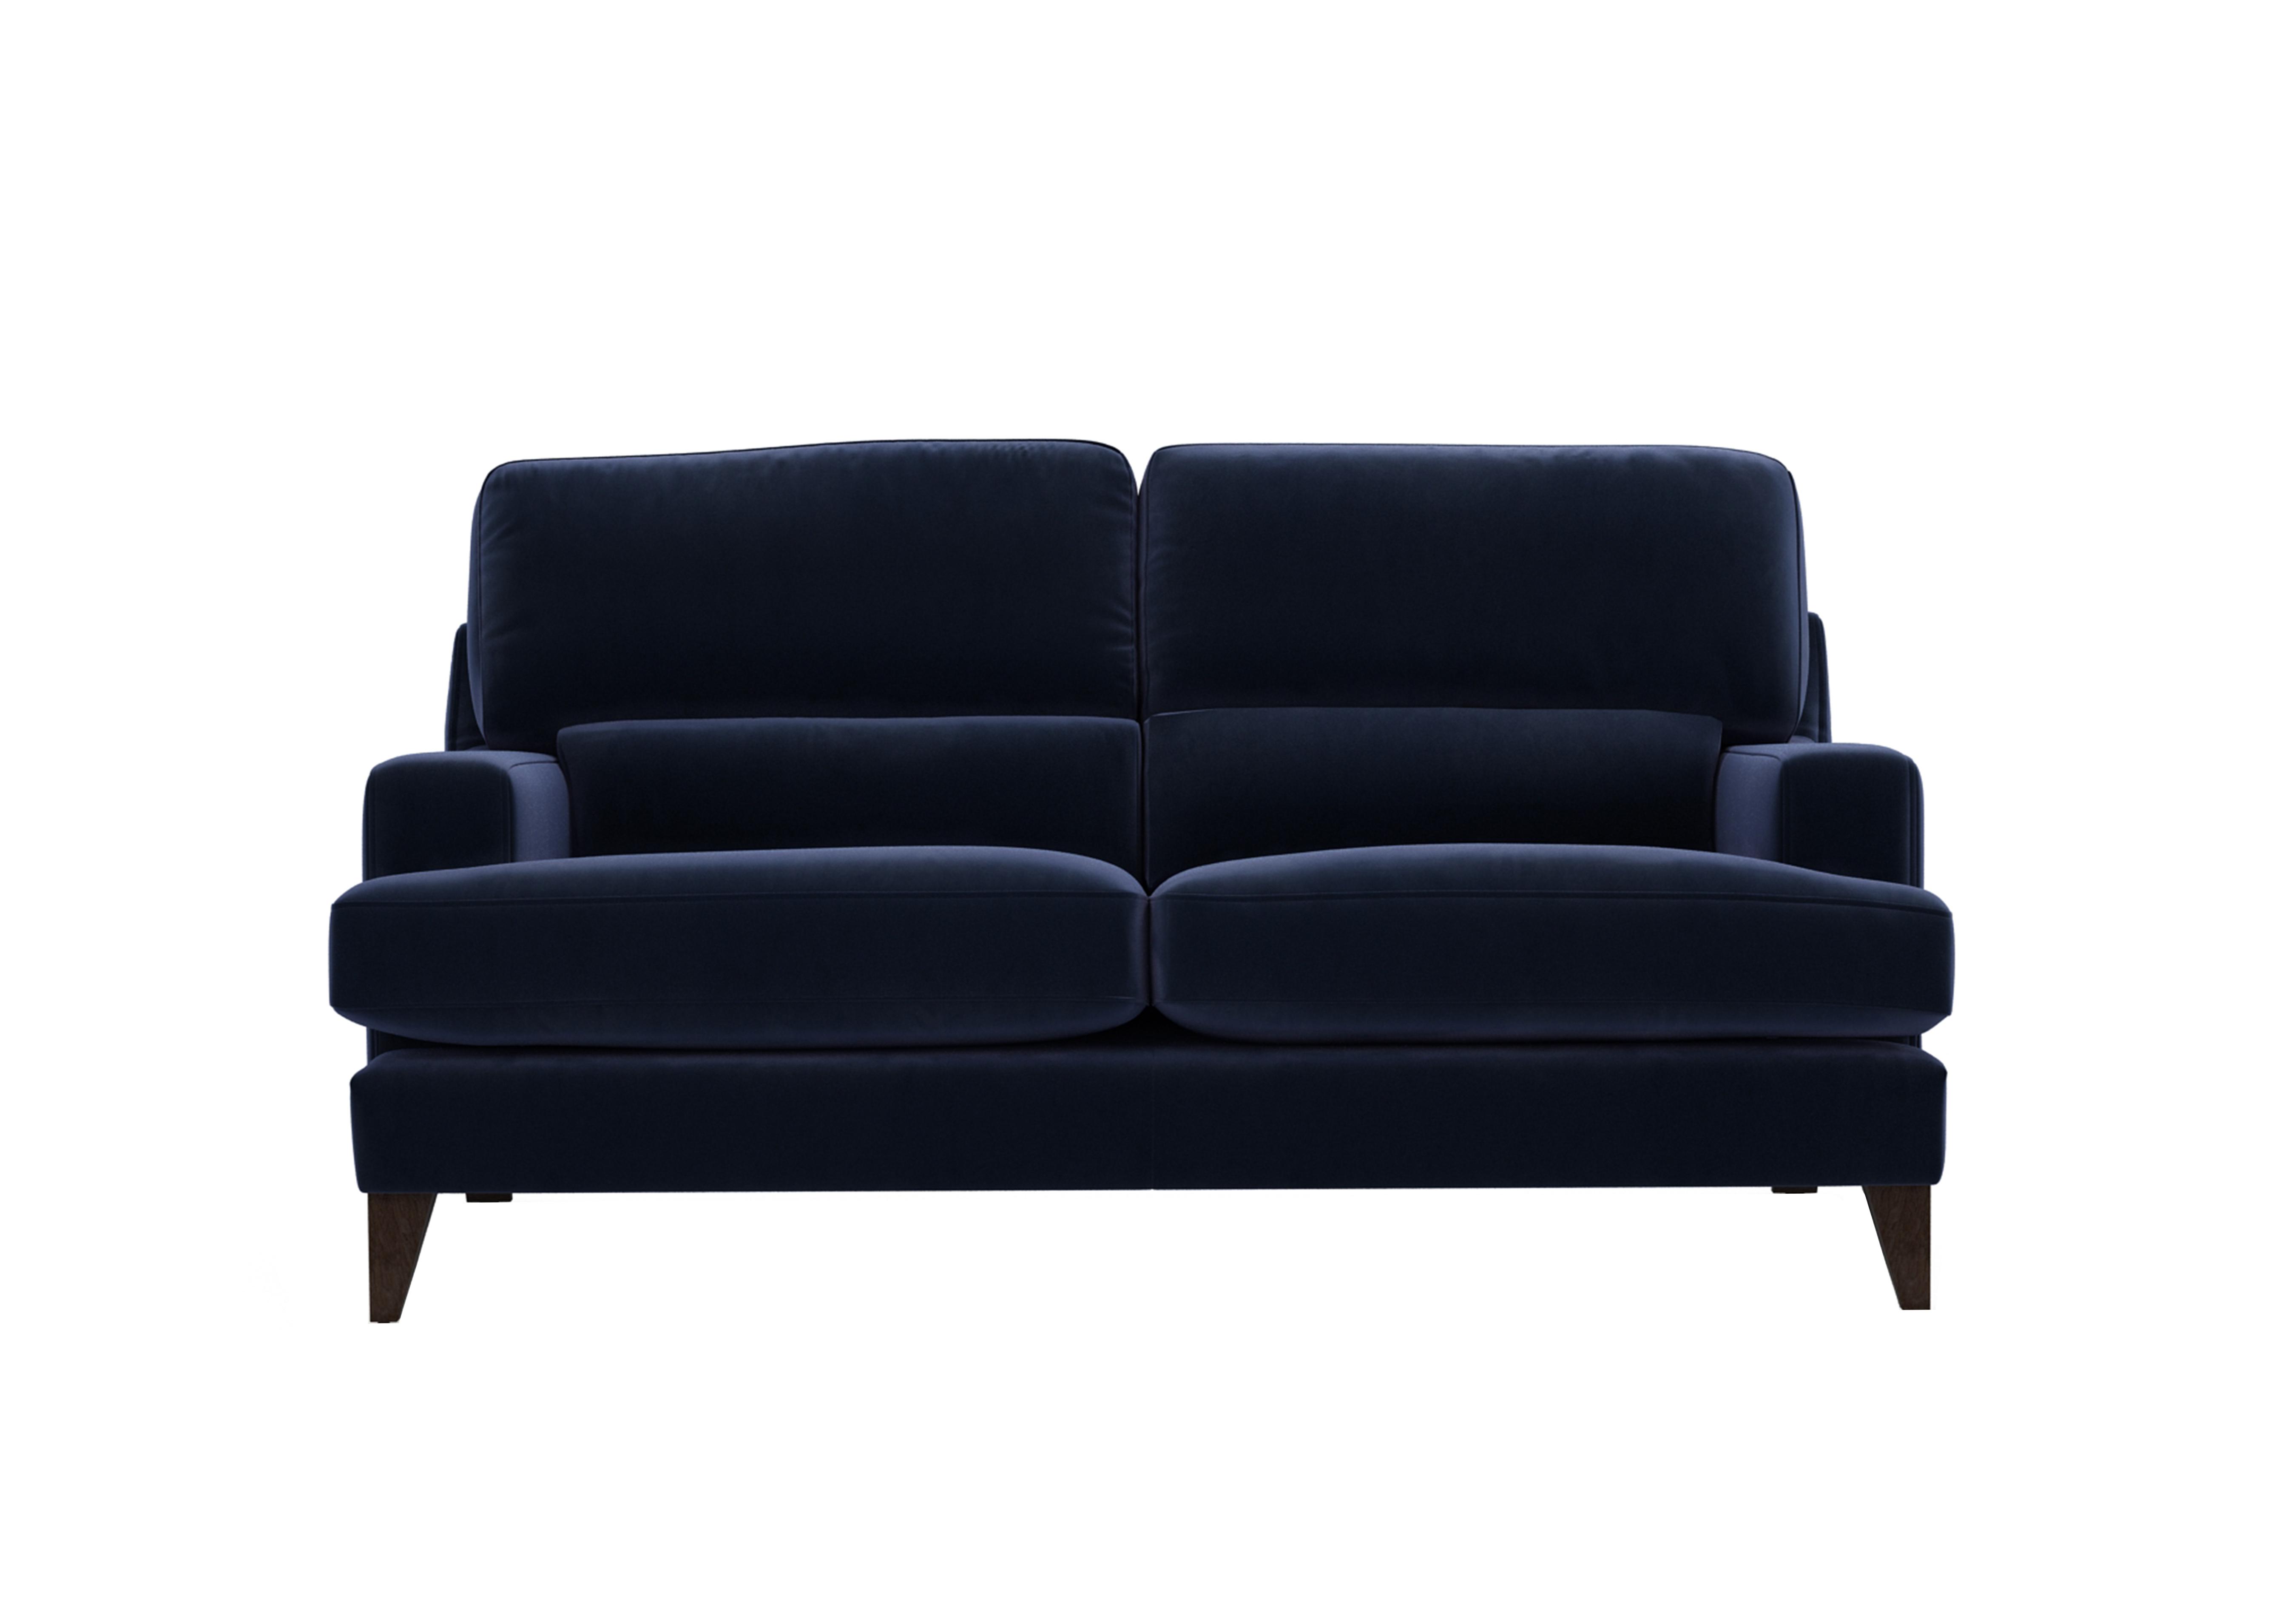 Romilly 2.5 Seater Fabric Sofa in Mid009 Midnight Indigo Wa Ft on Furniture Village